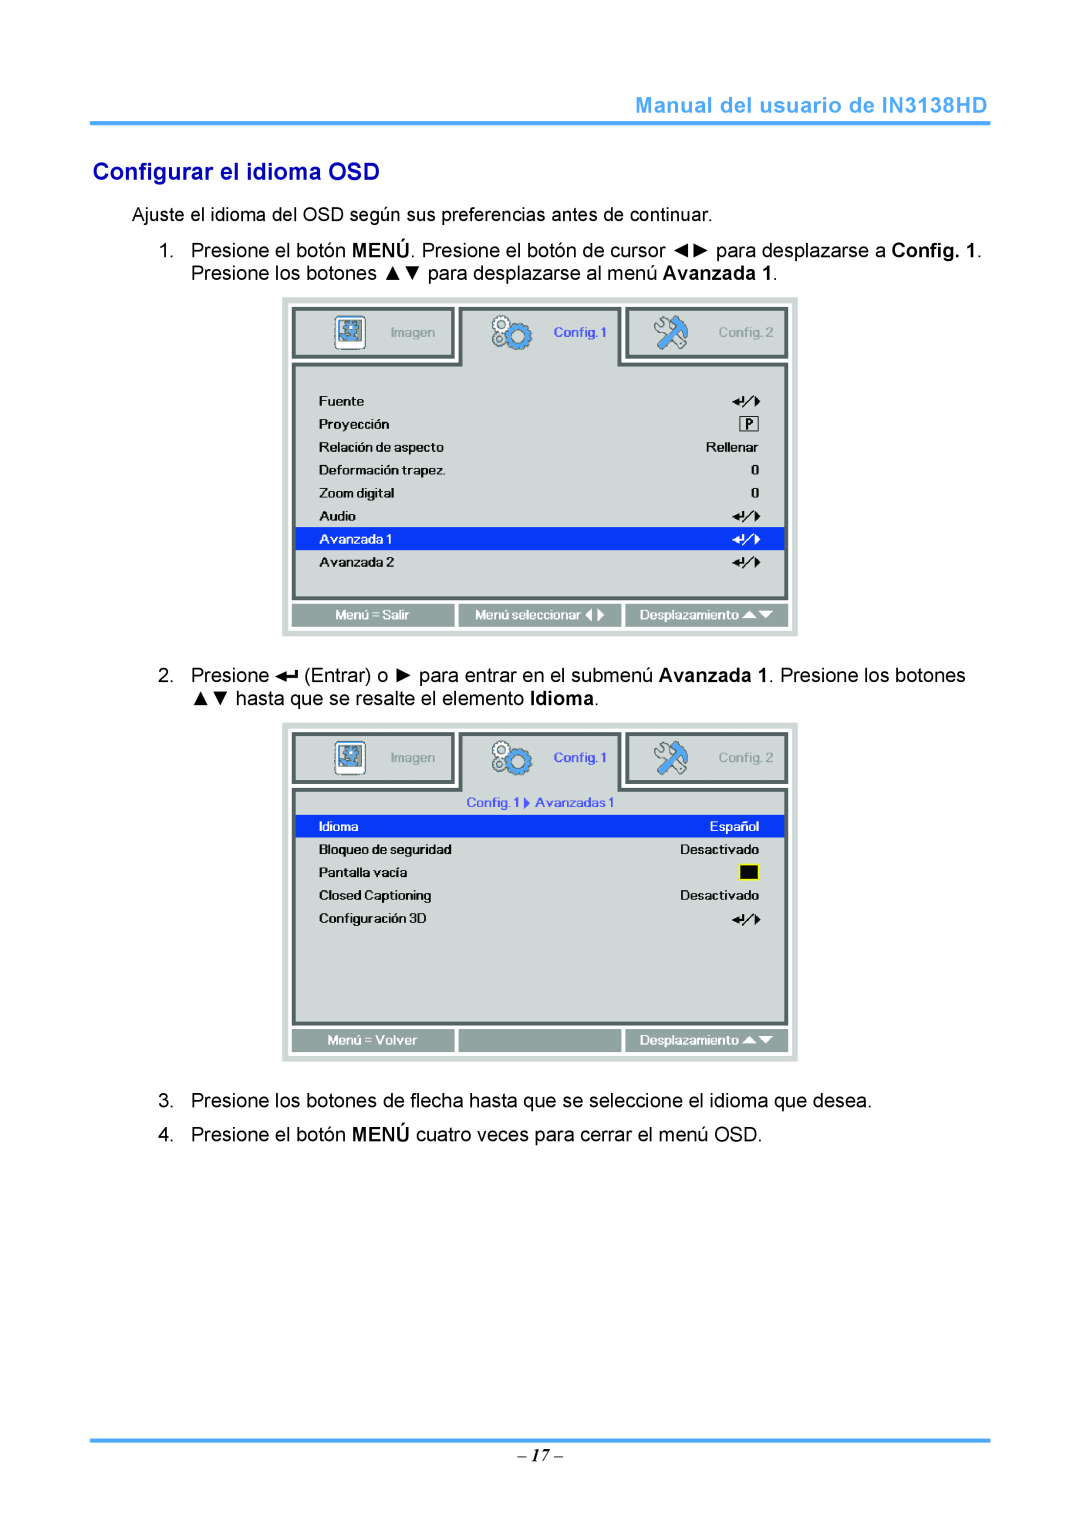 InFocus 3534324301 manual Configurar el idioma OSD, Manual del usuario de IN3138HD, 17 